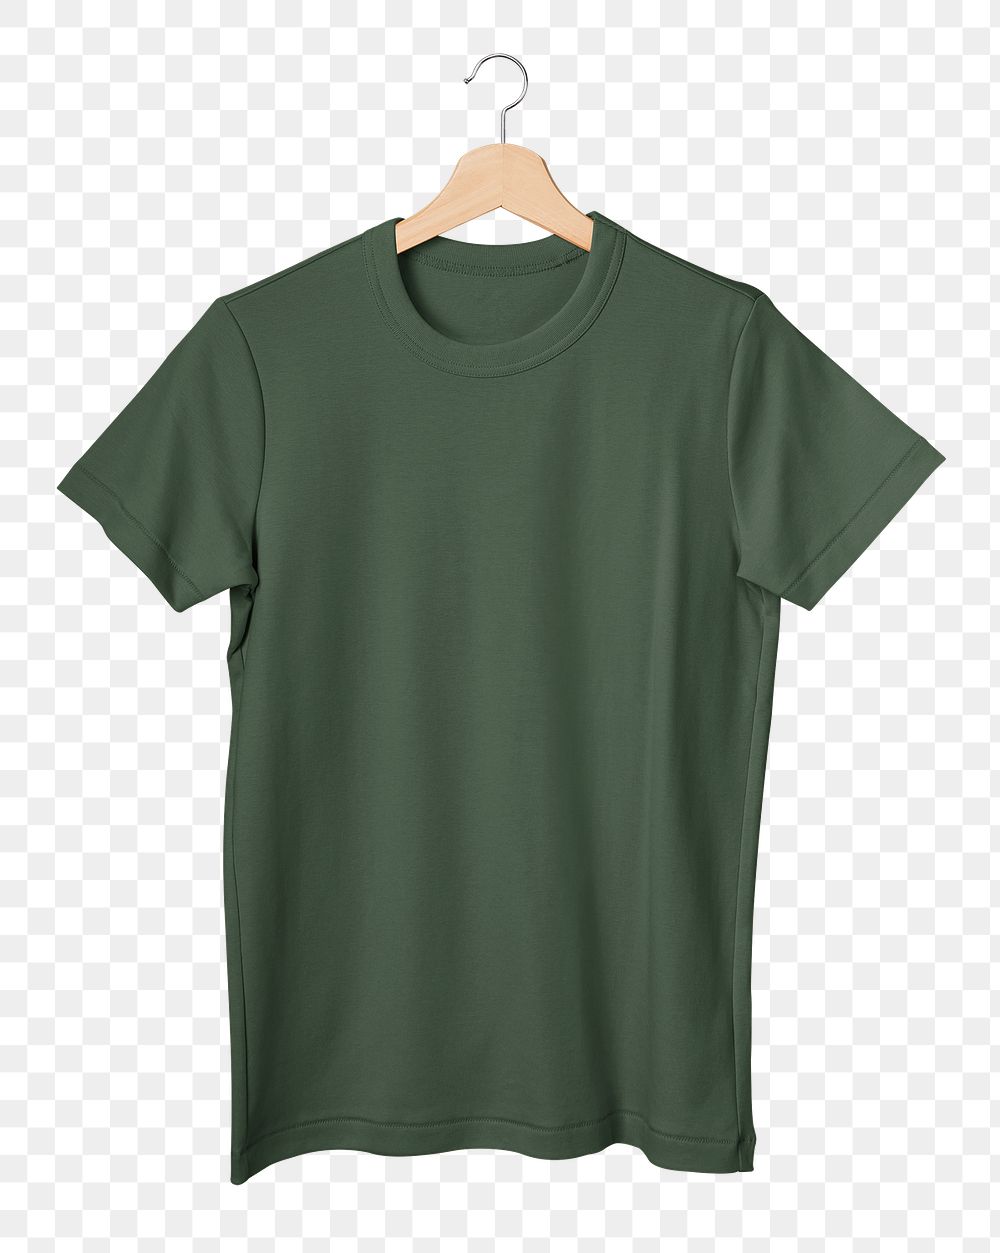 Green t-shirt png, simple unisex fashion, transparent design transparent background 